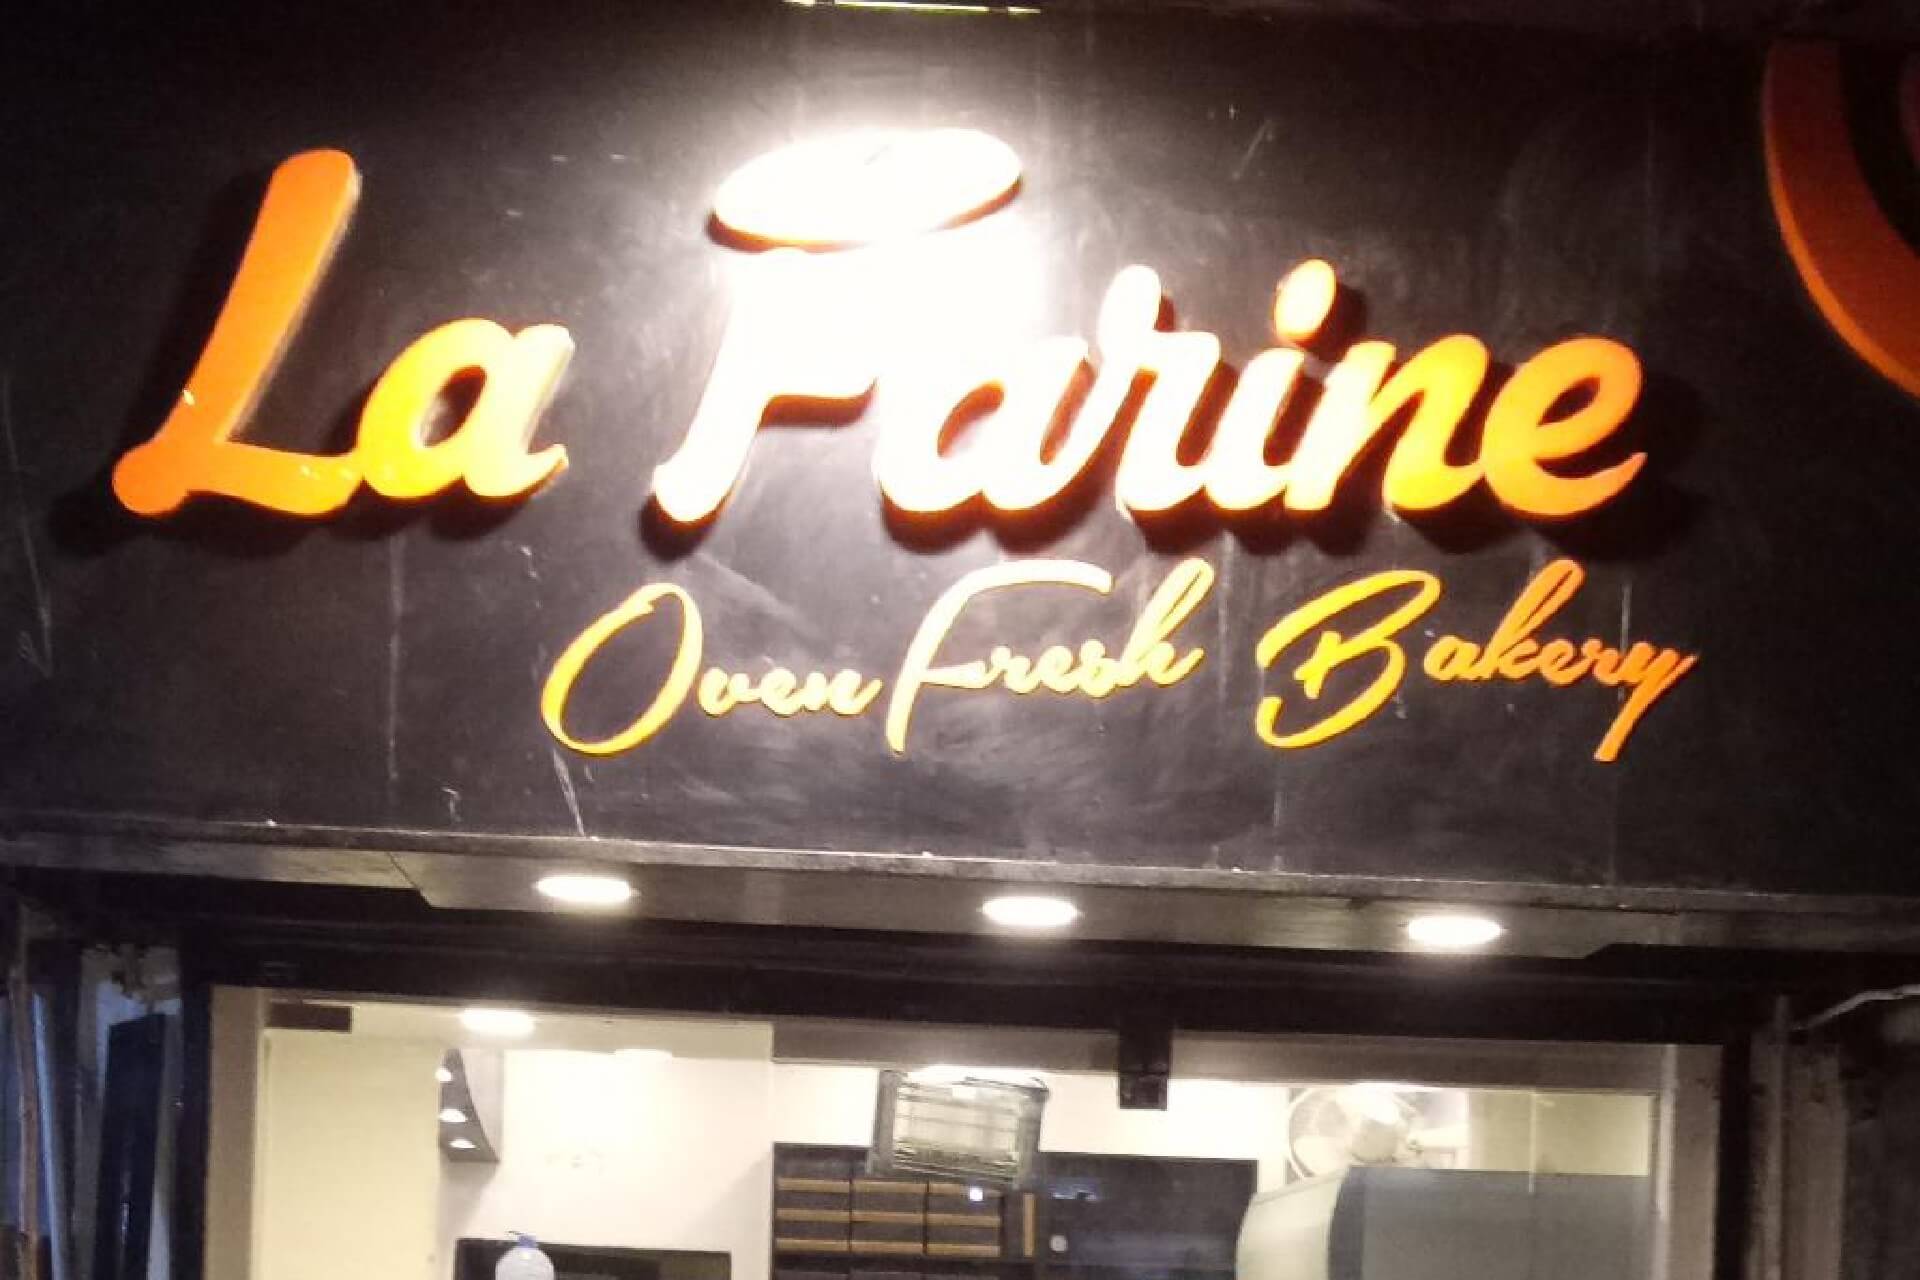 La Farine Oven Fresh Bakery Karachi